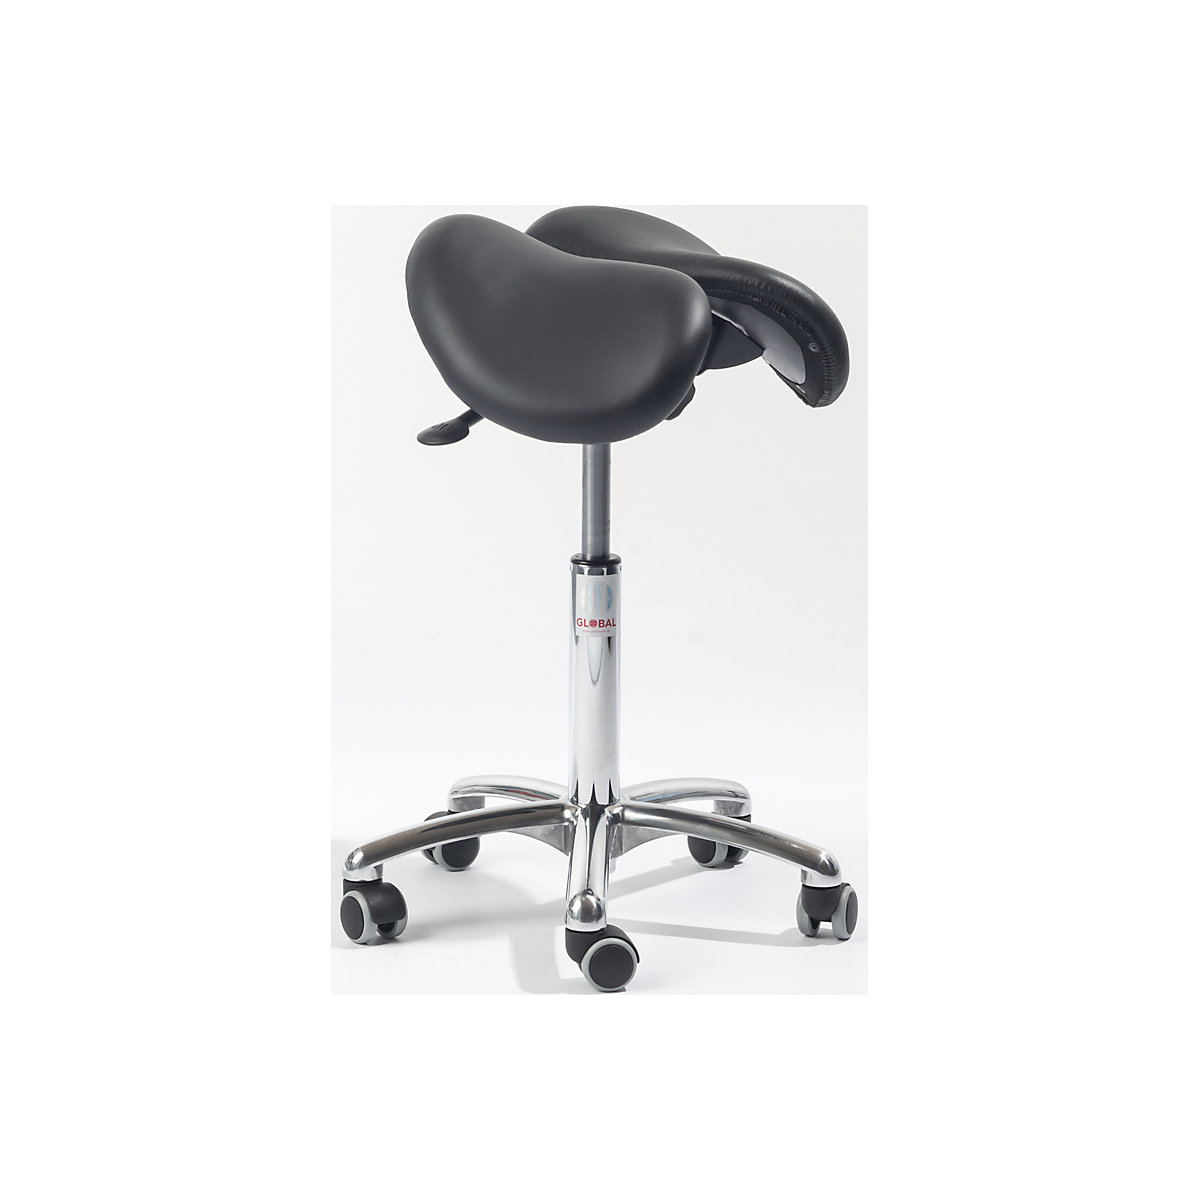 Saddle stool with a split seat